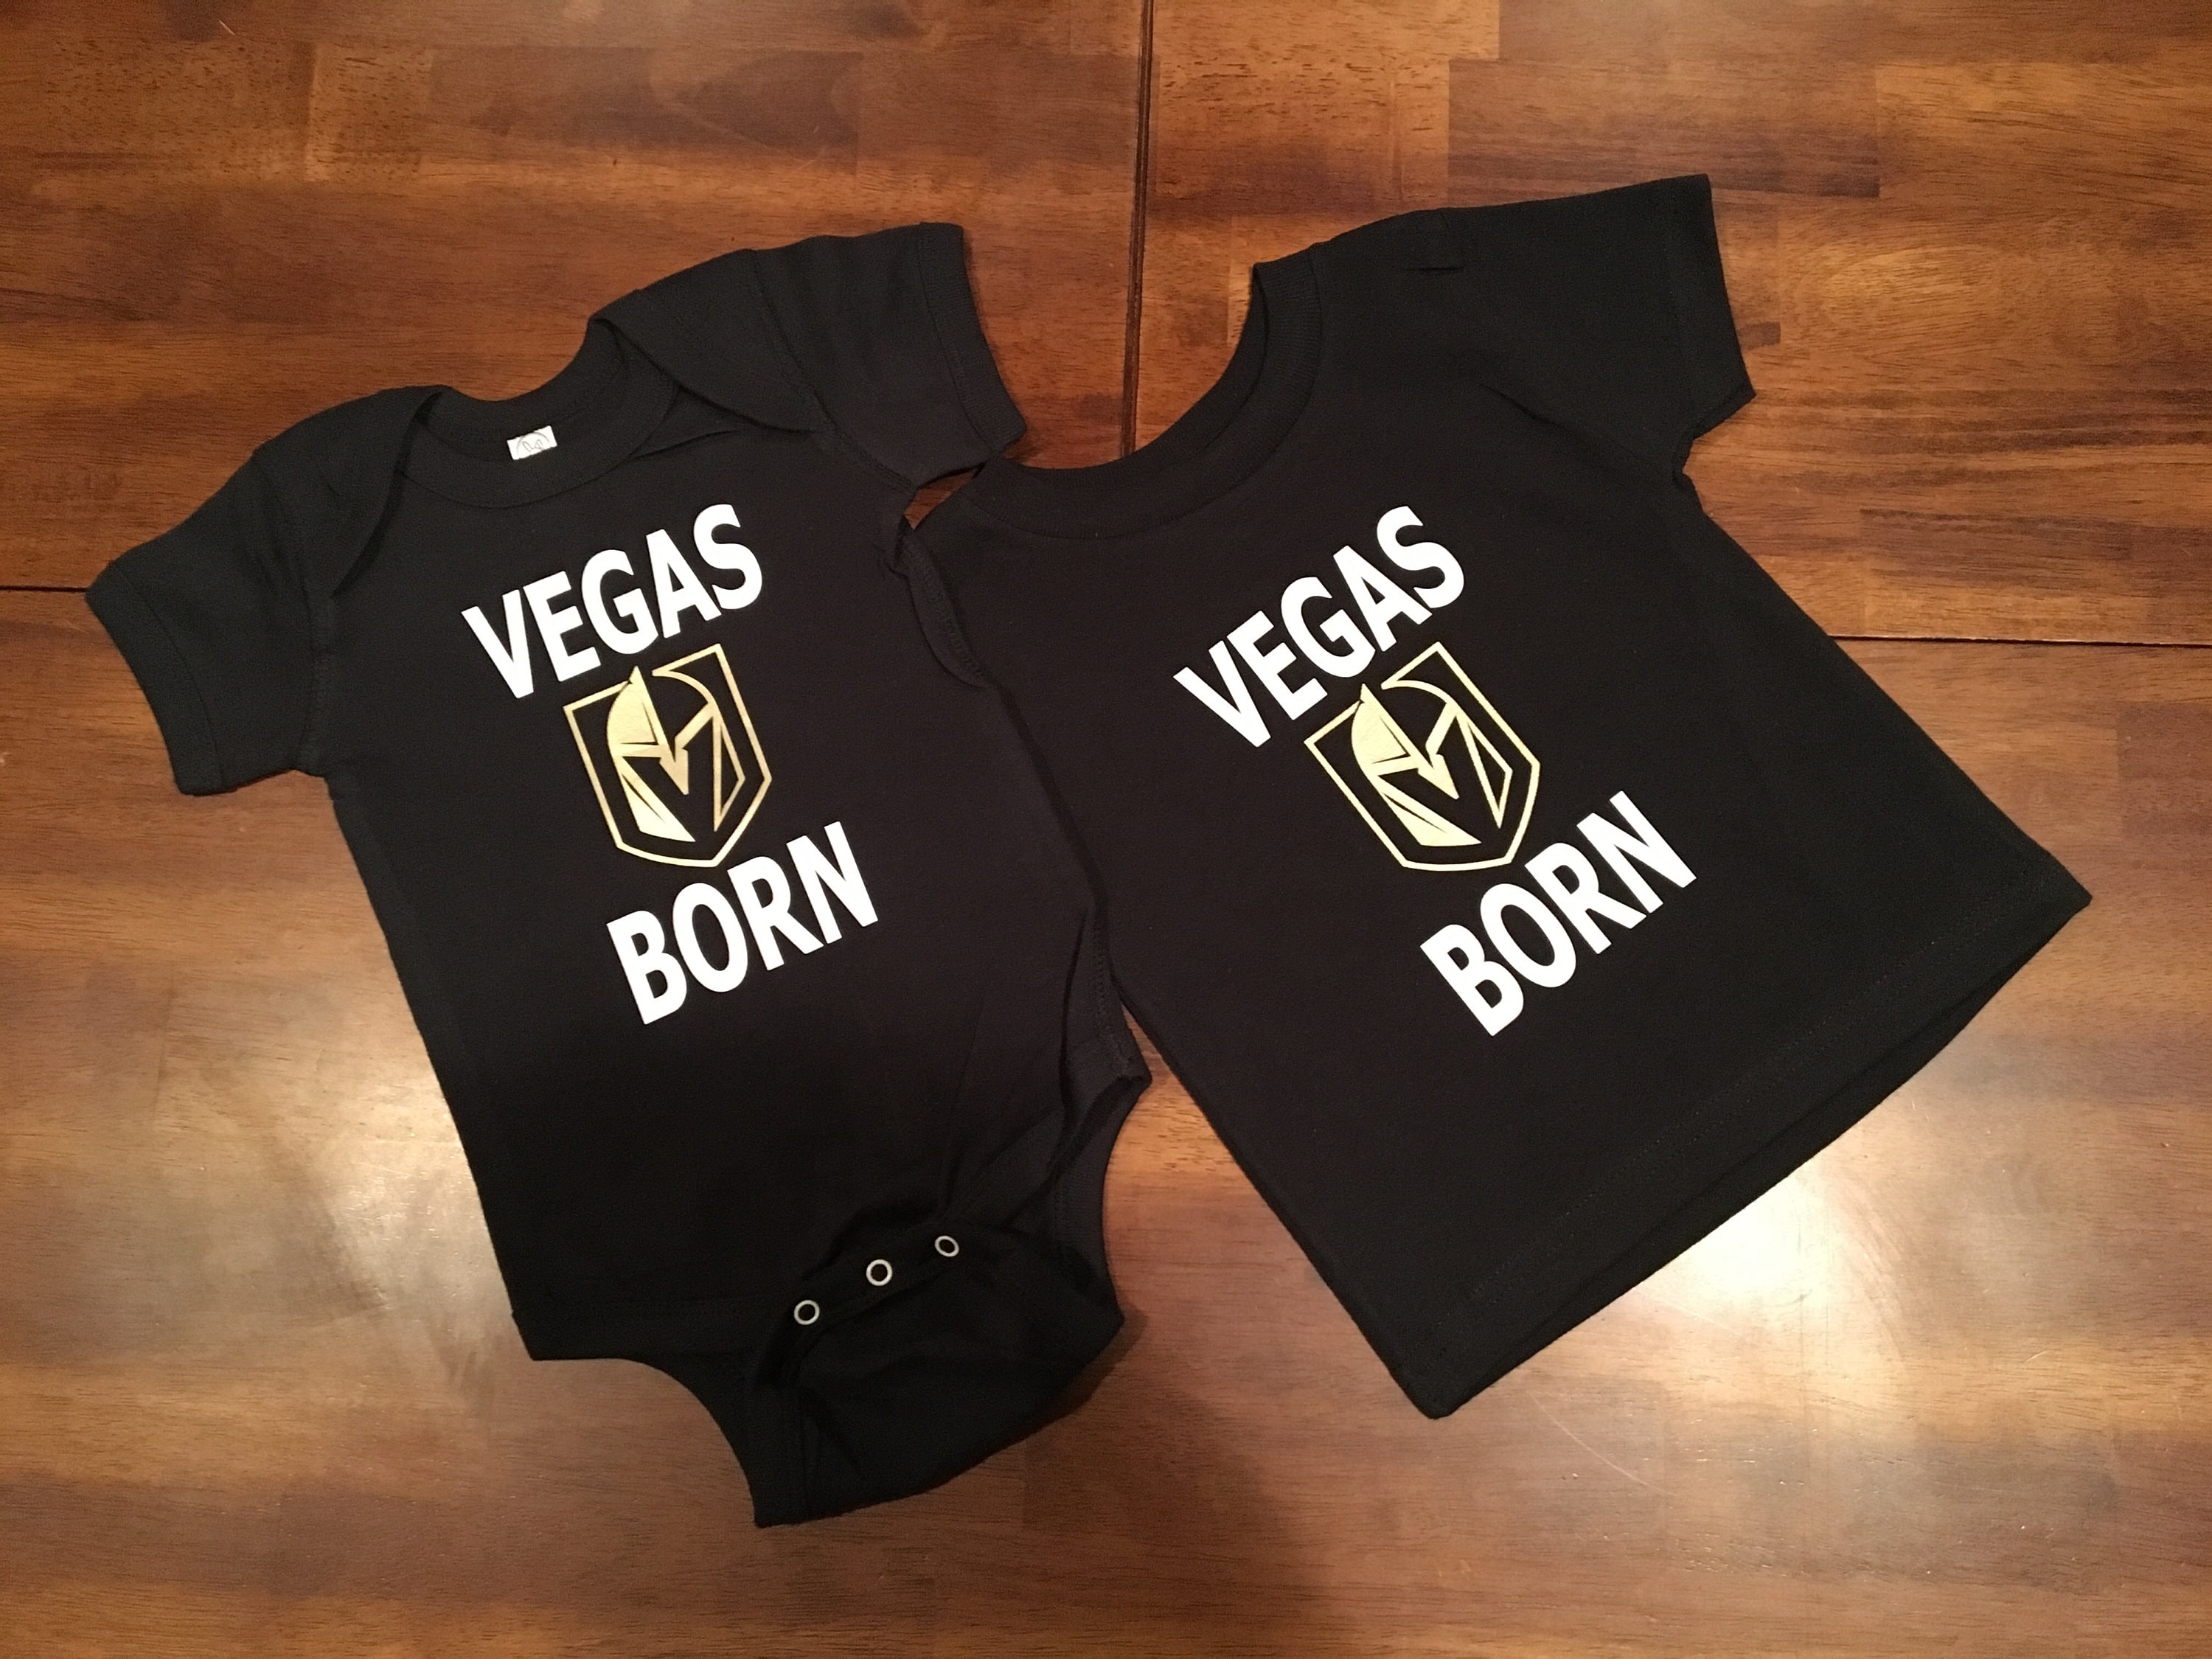 Las Vegas Golden Knights Championship Vintage Shirt - Teespix